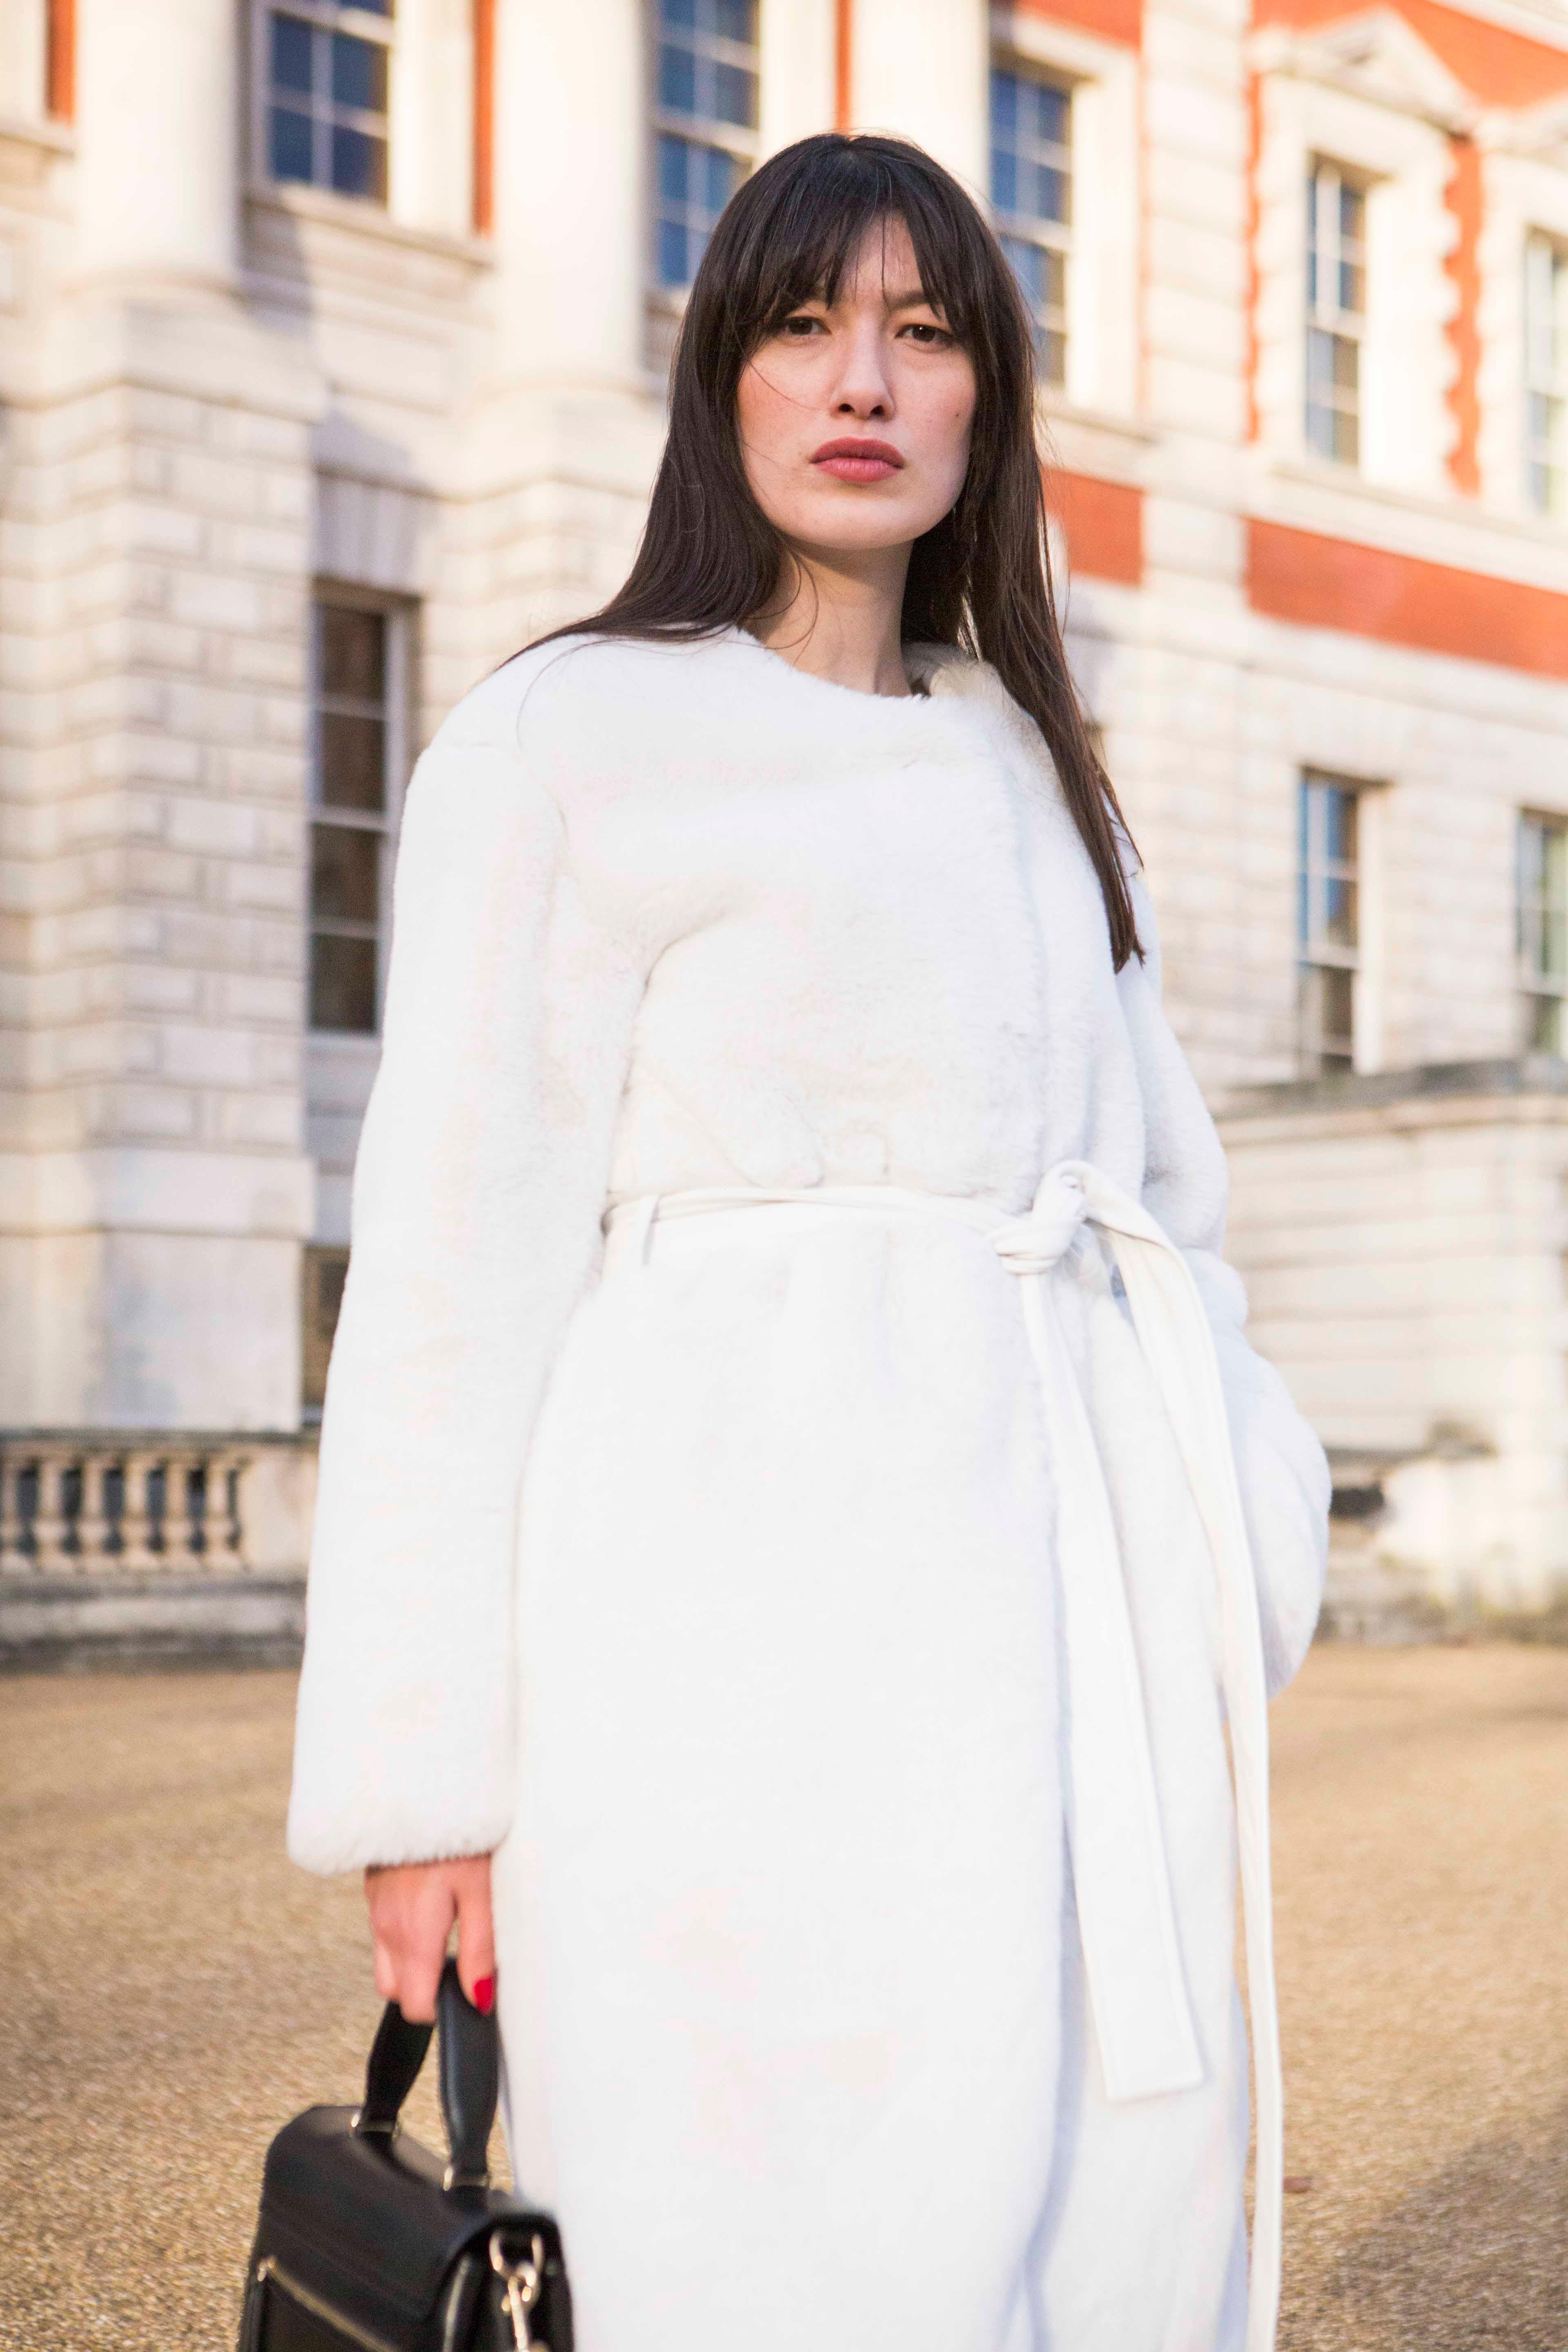 Women's Verheyen London Serena  Collarless Faux Fur Coat in White - Size uk 12 For Sale